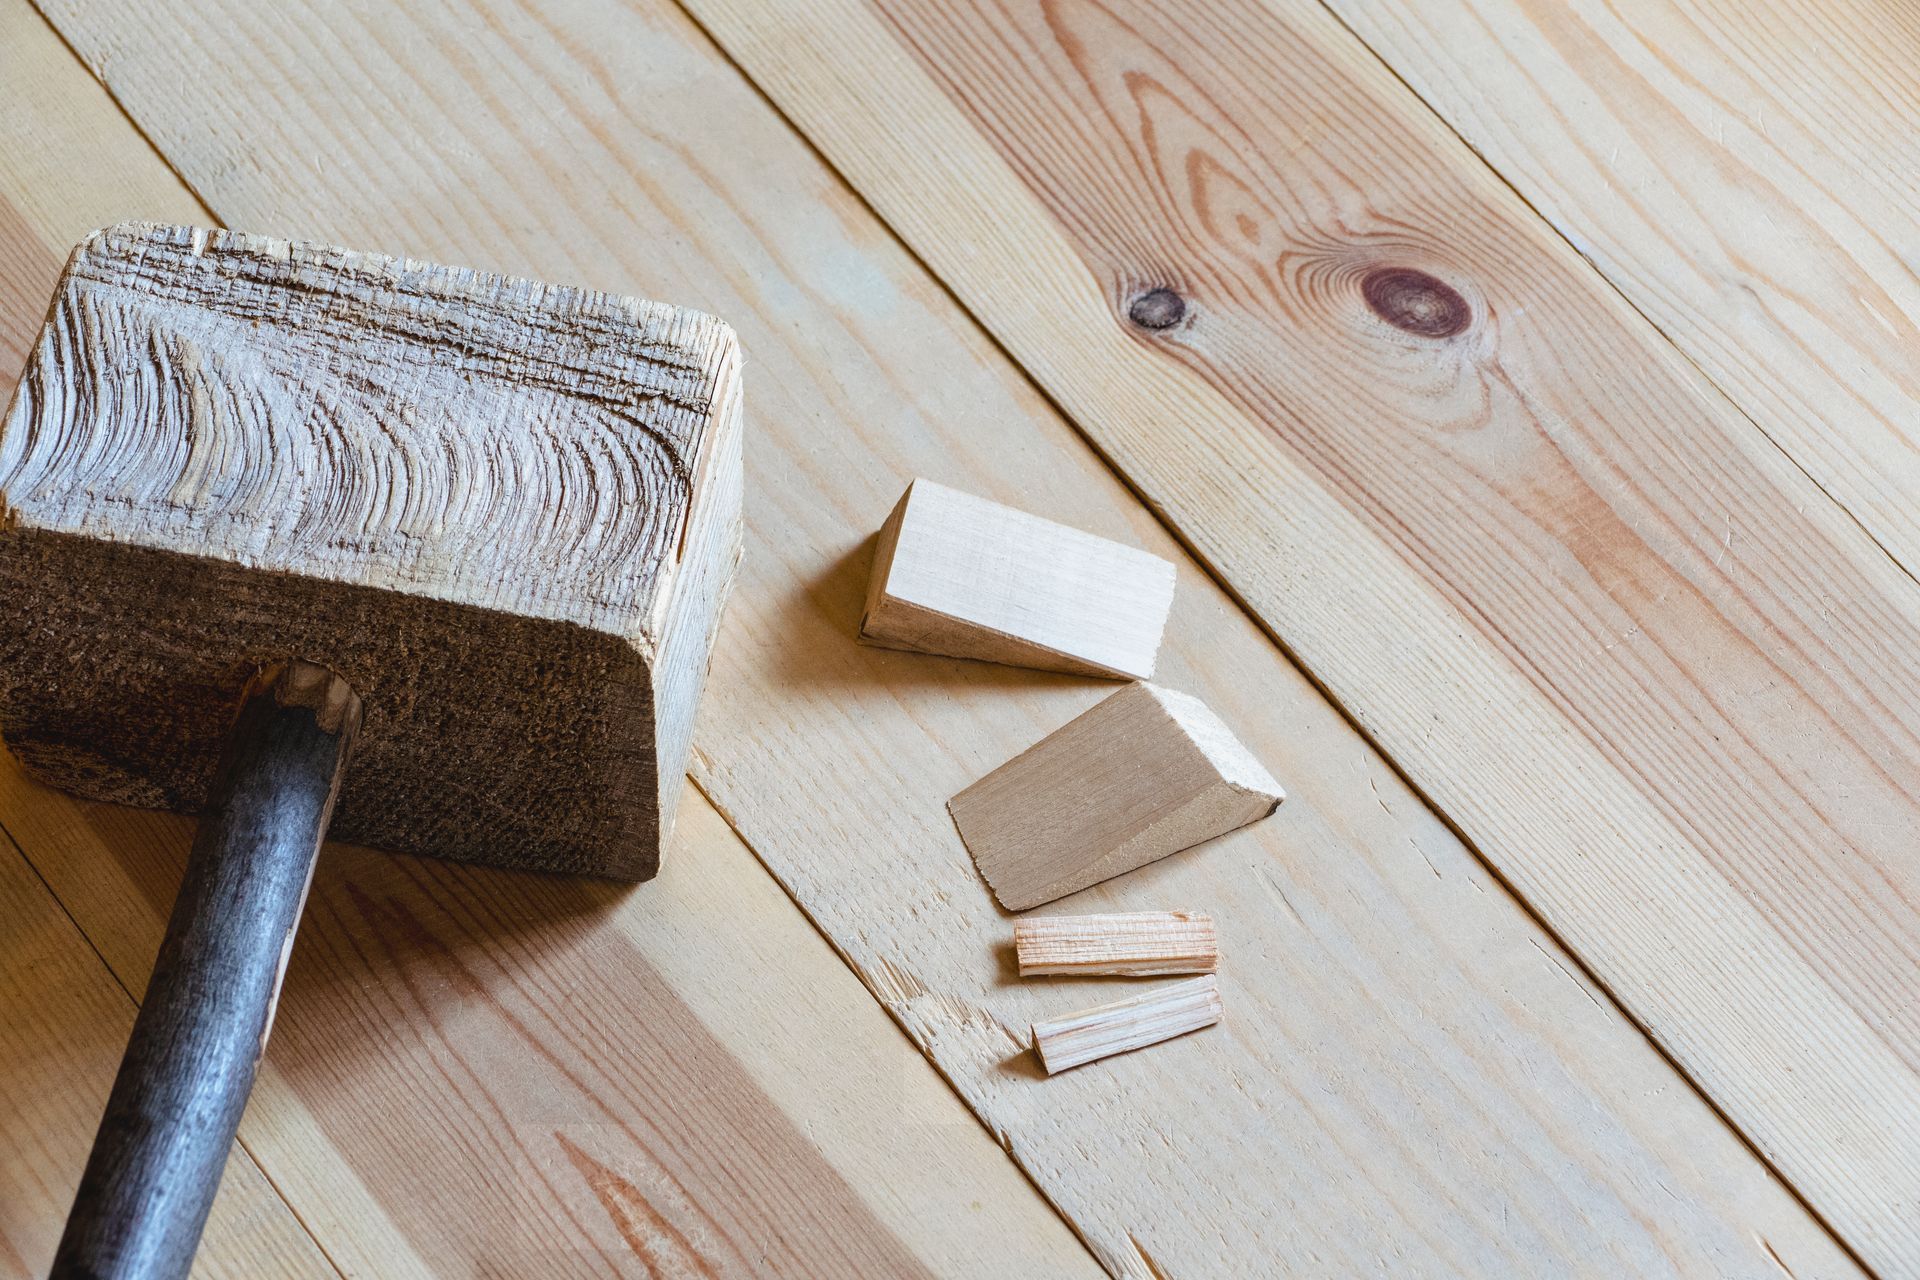 wooden floor repair tools